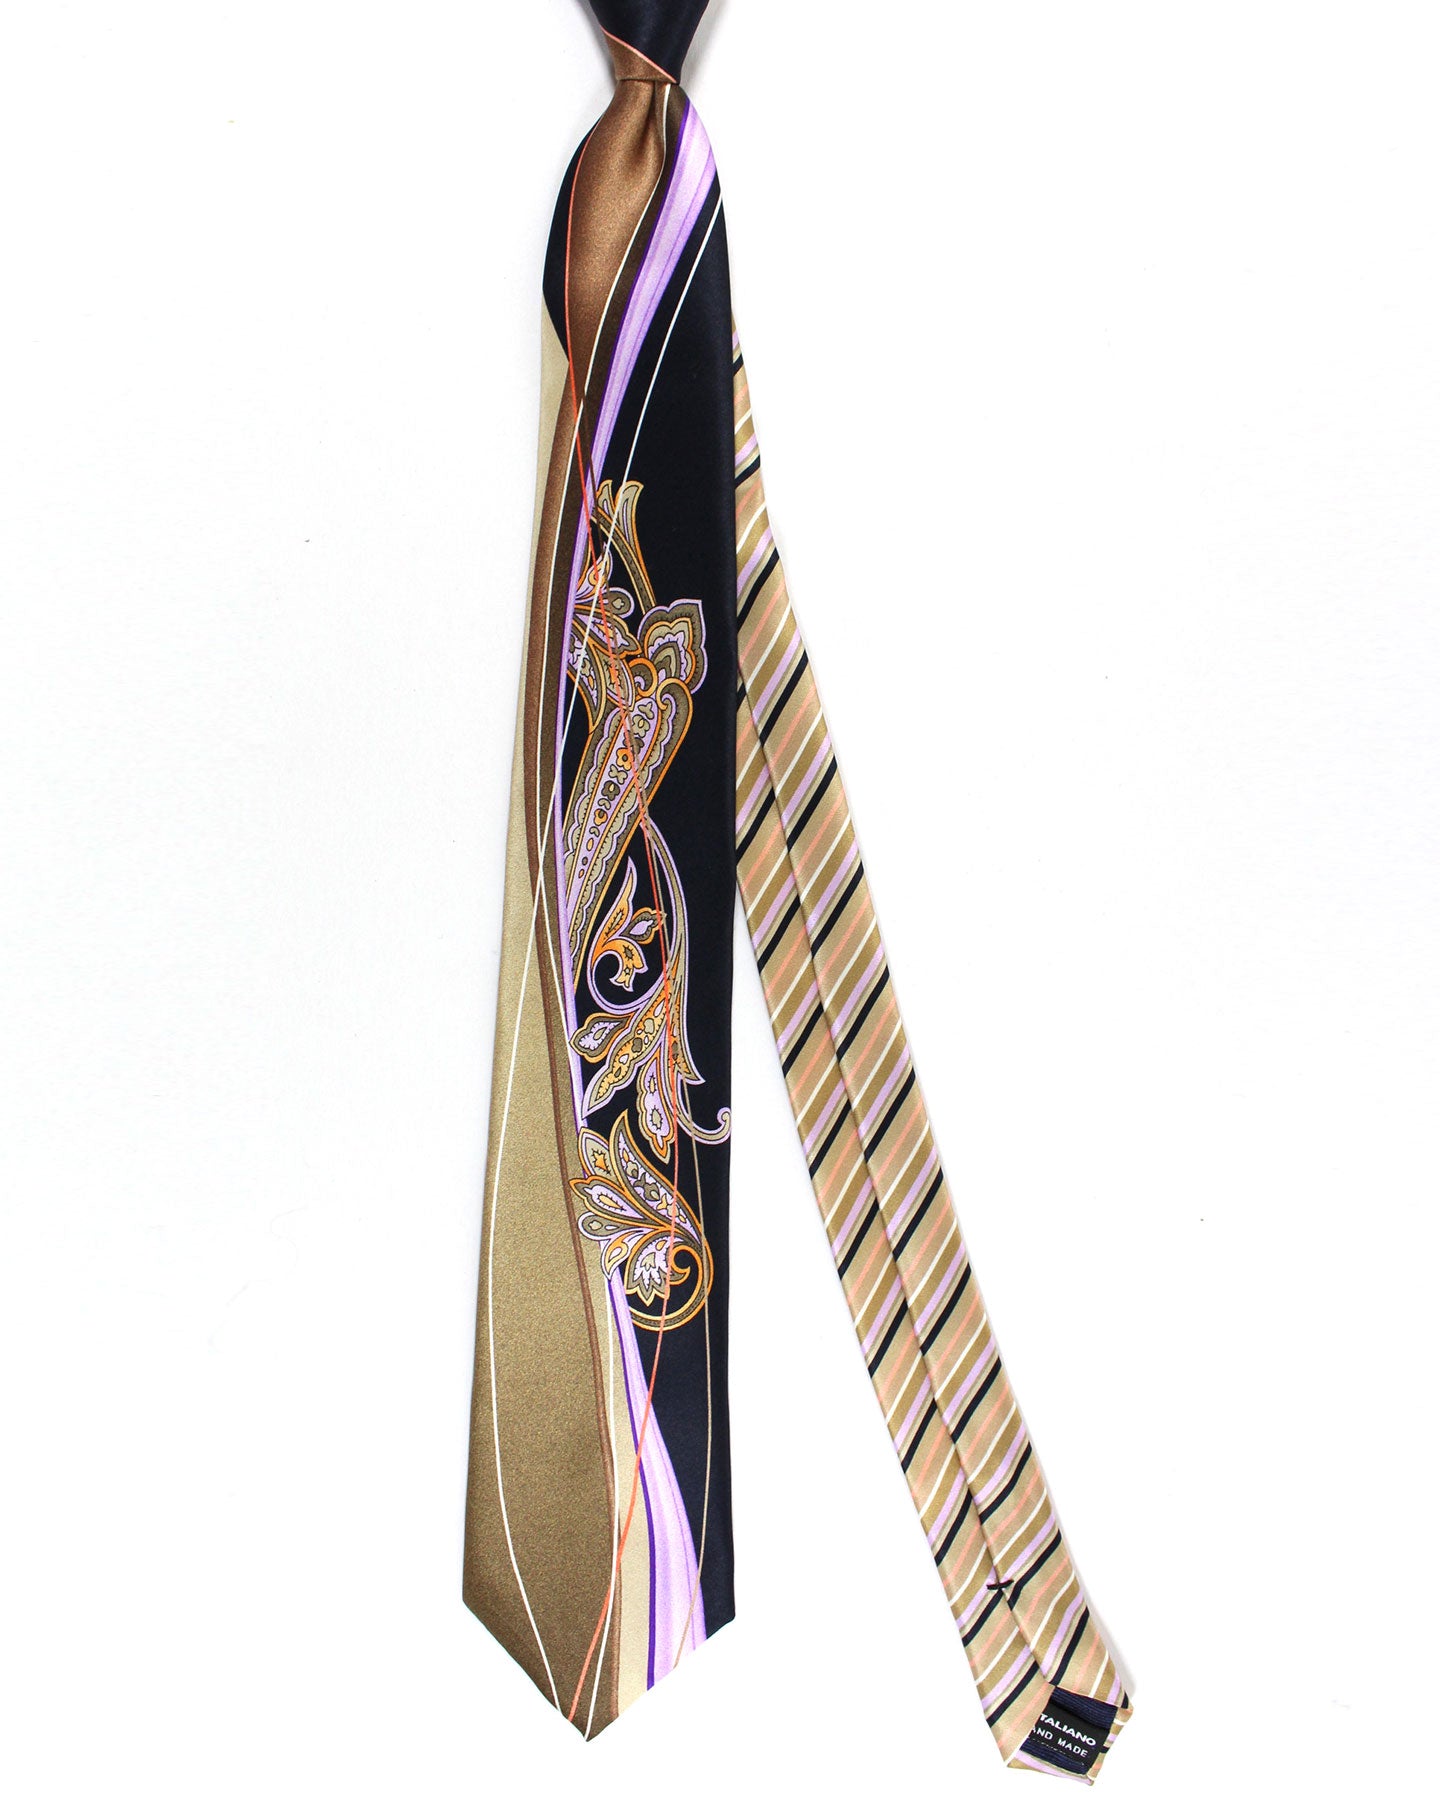 Vitaliano Pancaldi Silk Tie Black Taupe Lilac Ornamental Swirl Design